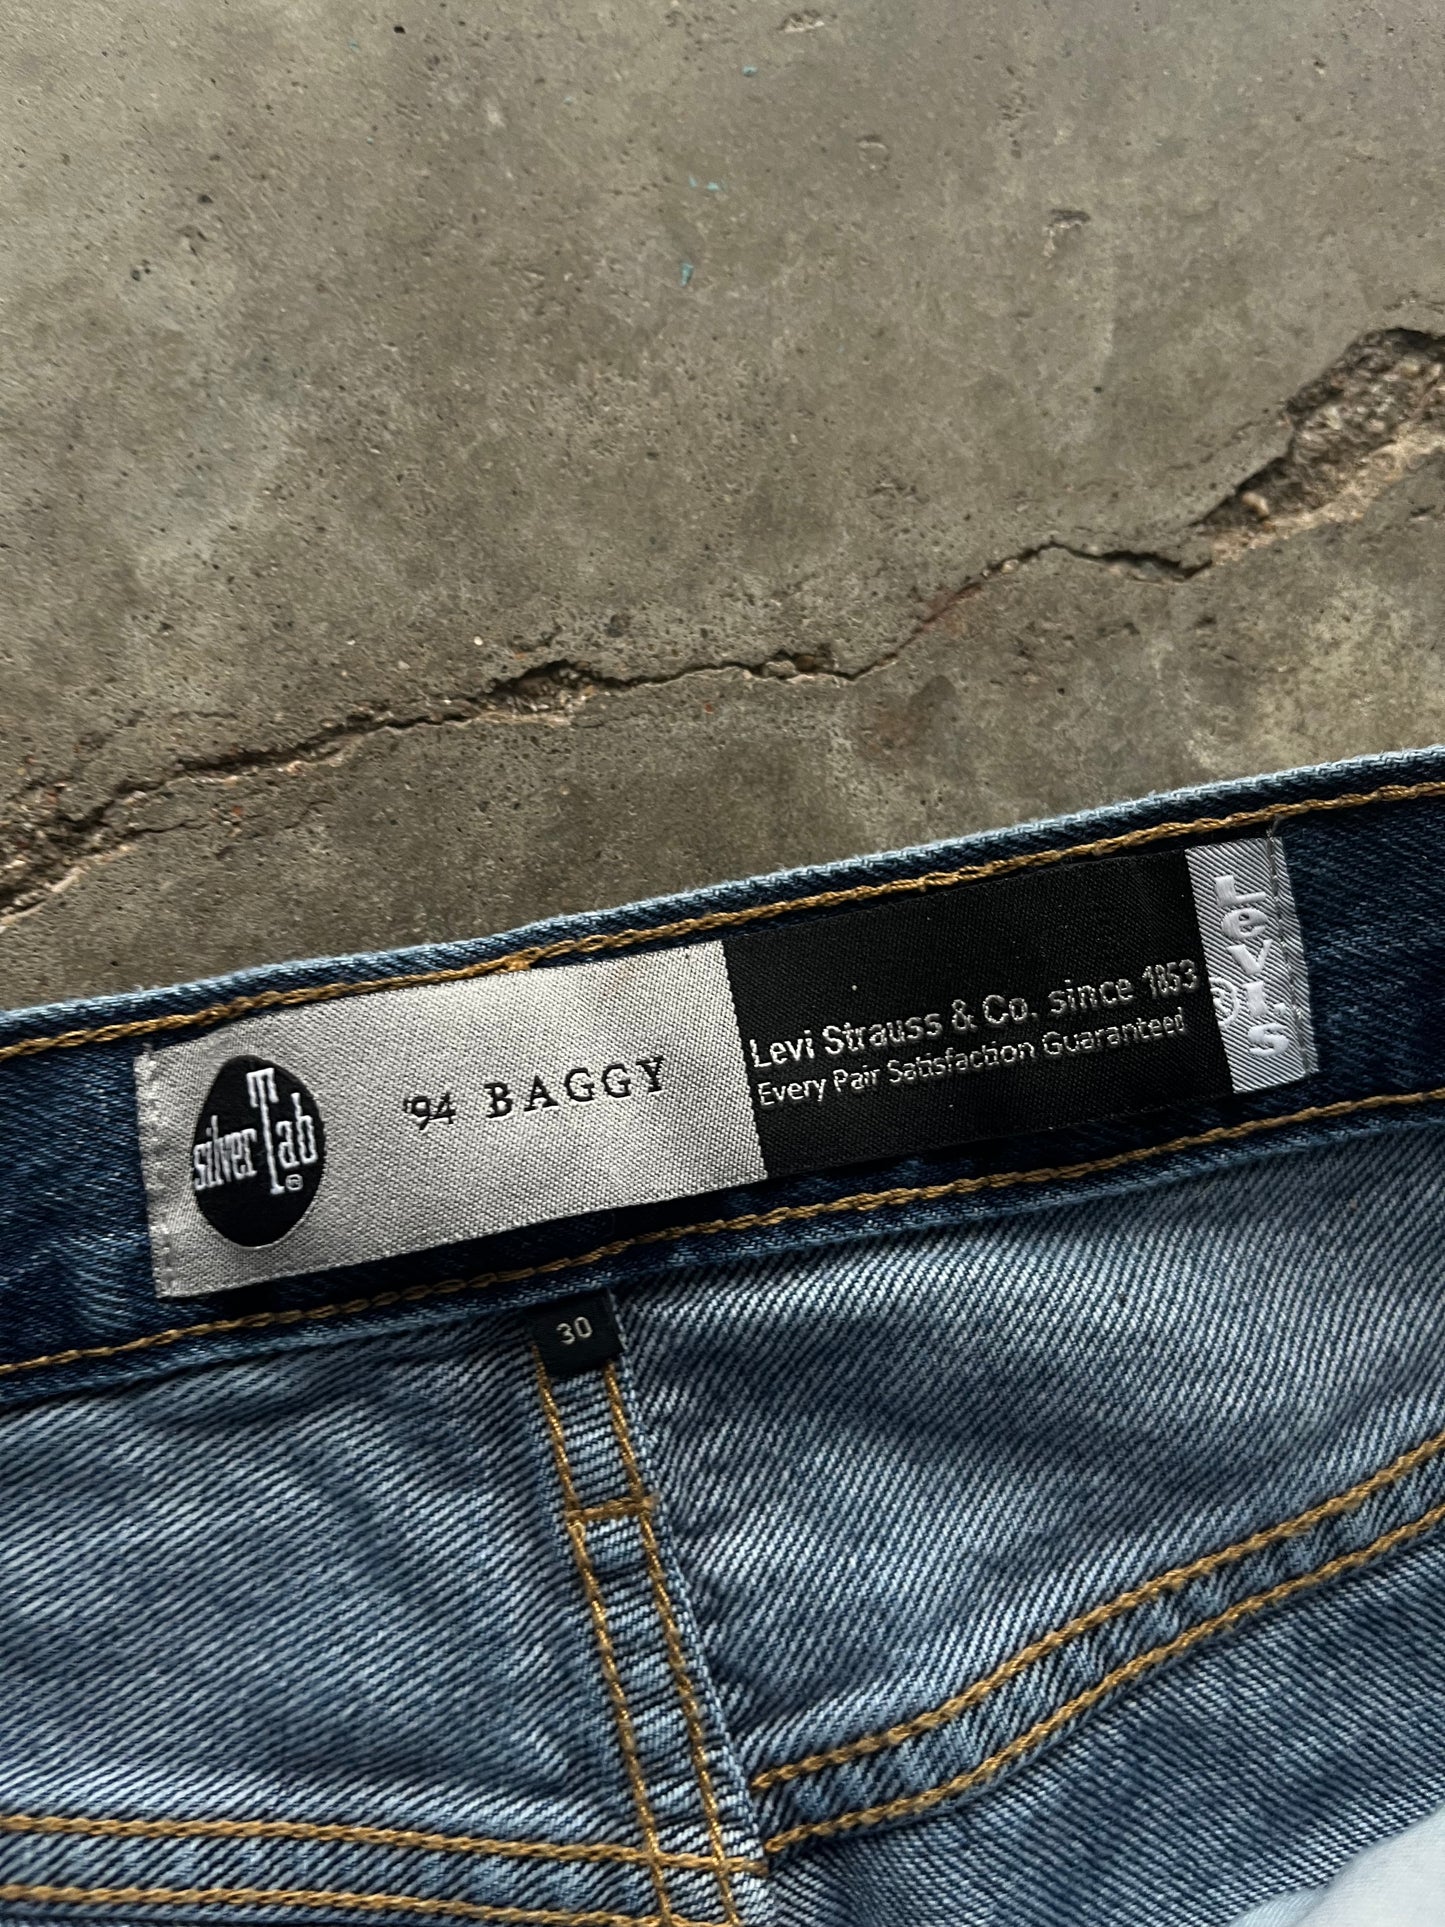 (30 x 31) Levi Baggy Silver Tab Denim Jeans